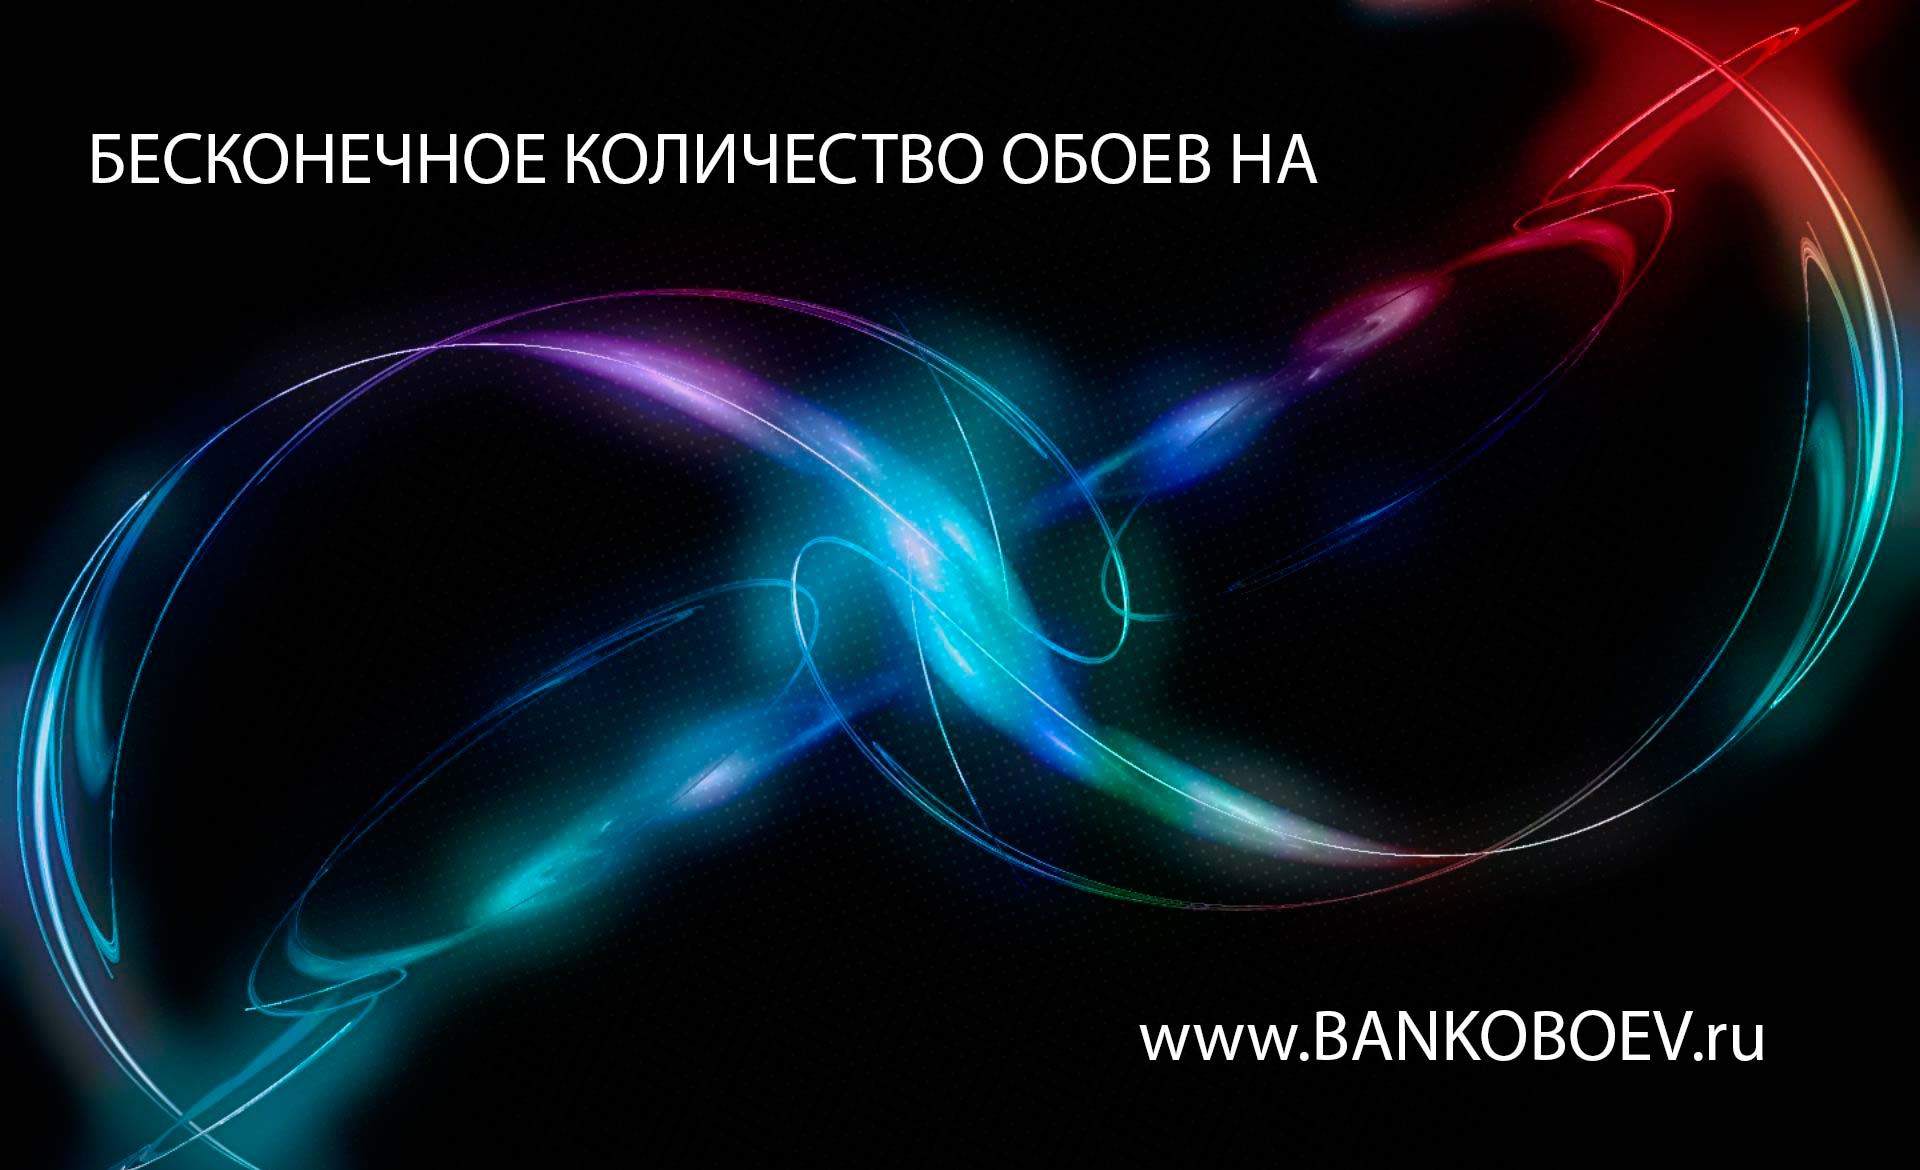 Bankoboev Ru Image Nzi3odq Jpg